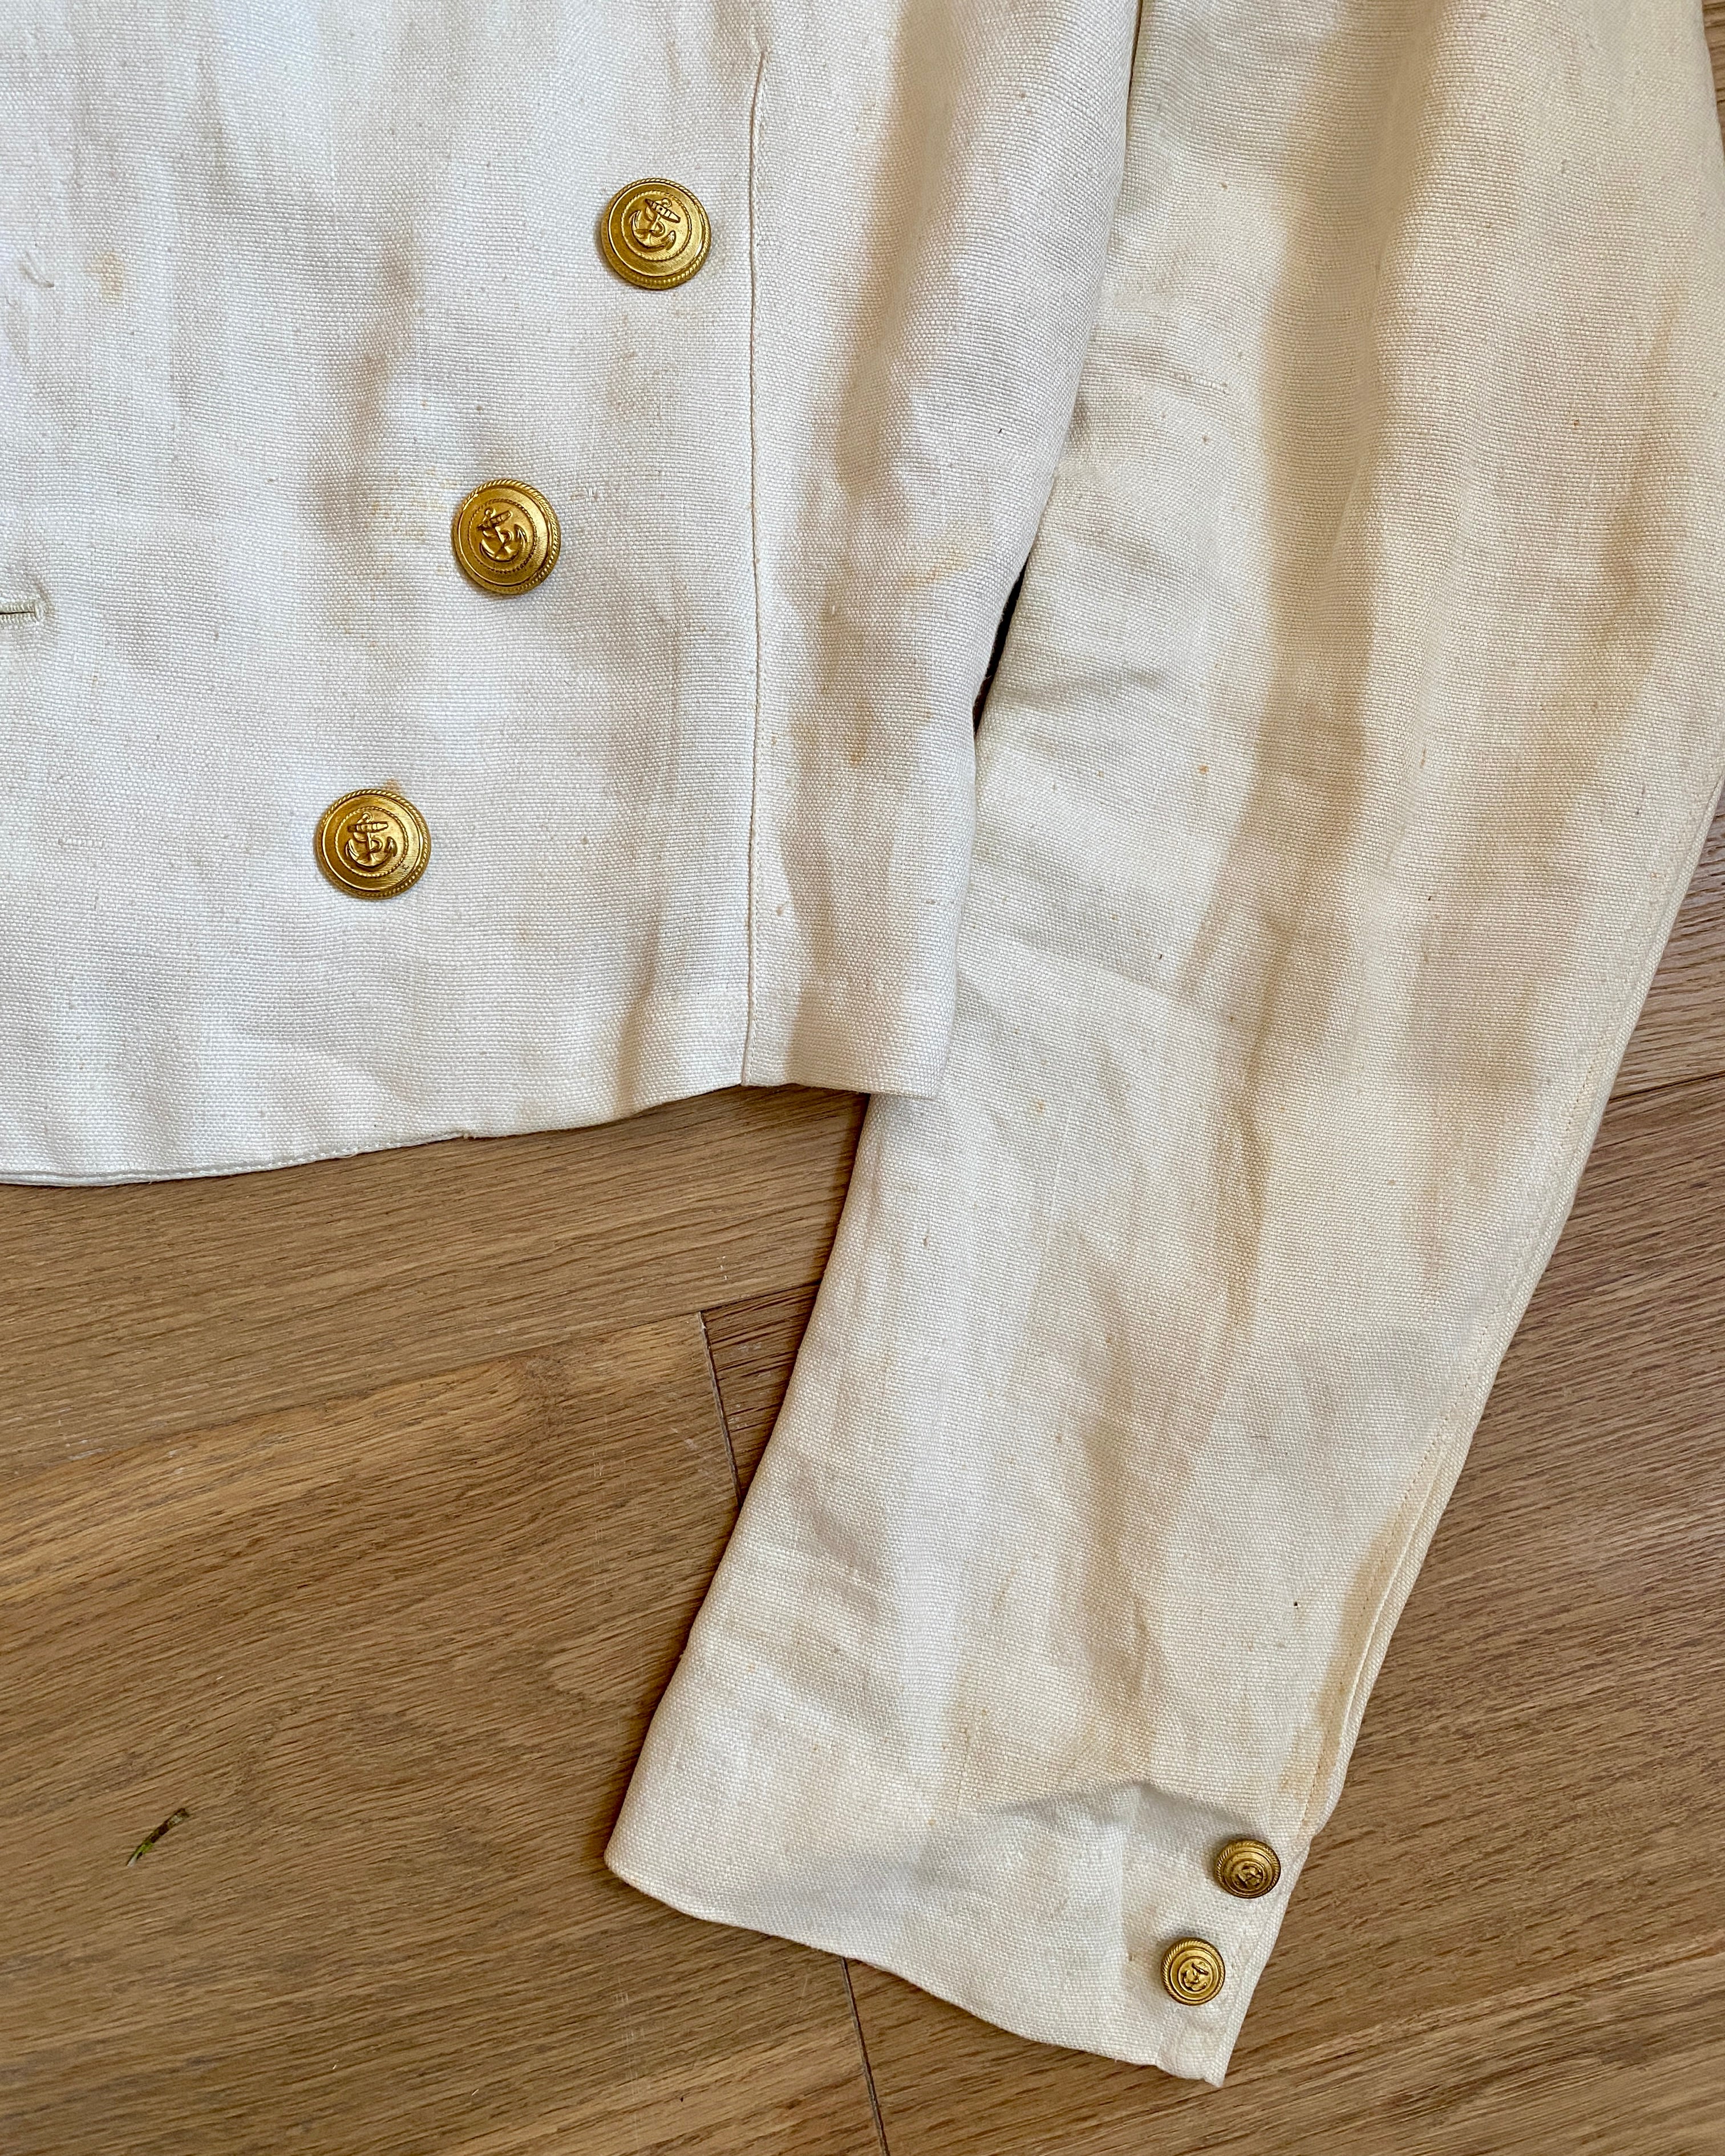 Vintage WW2 UNIONE MILITARE Italian Navy Military Officer White Ceremonial Uniform Jacket